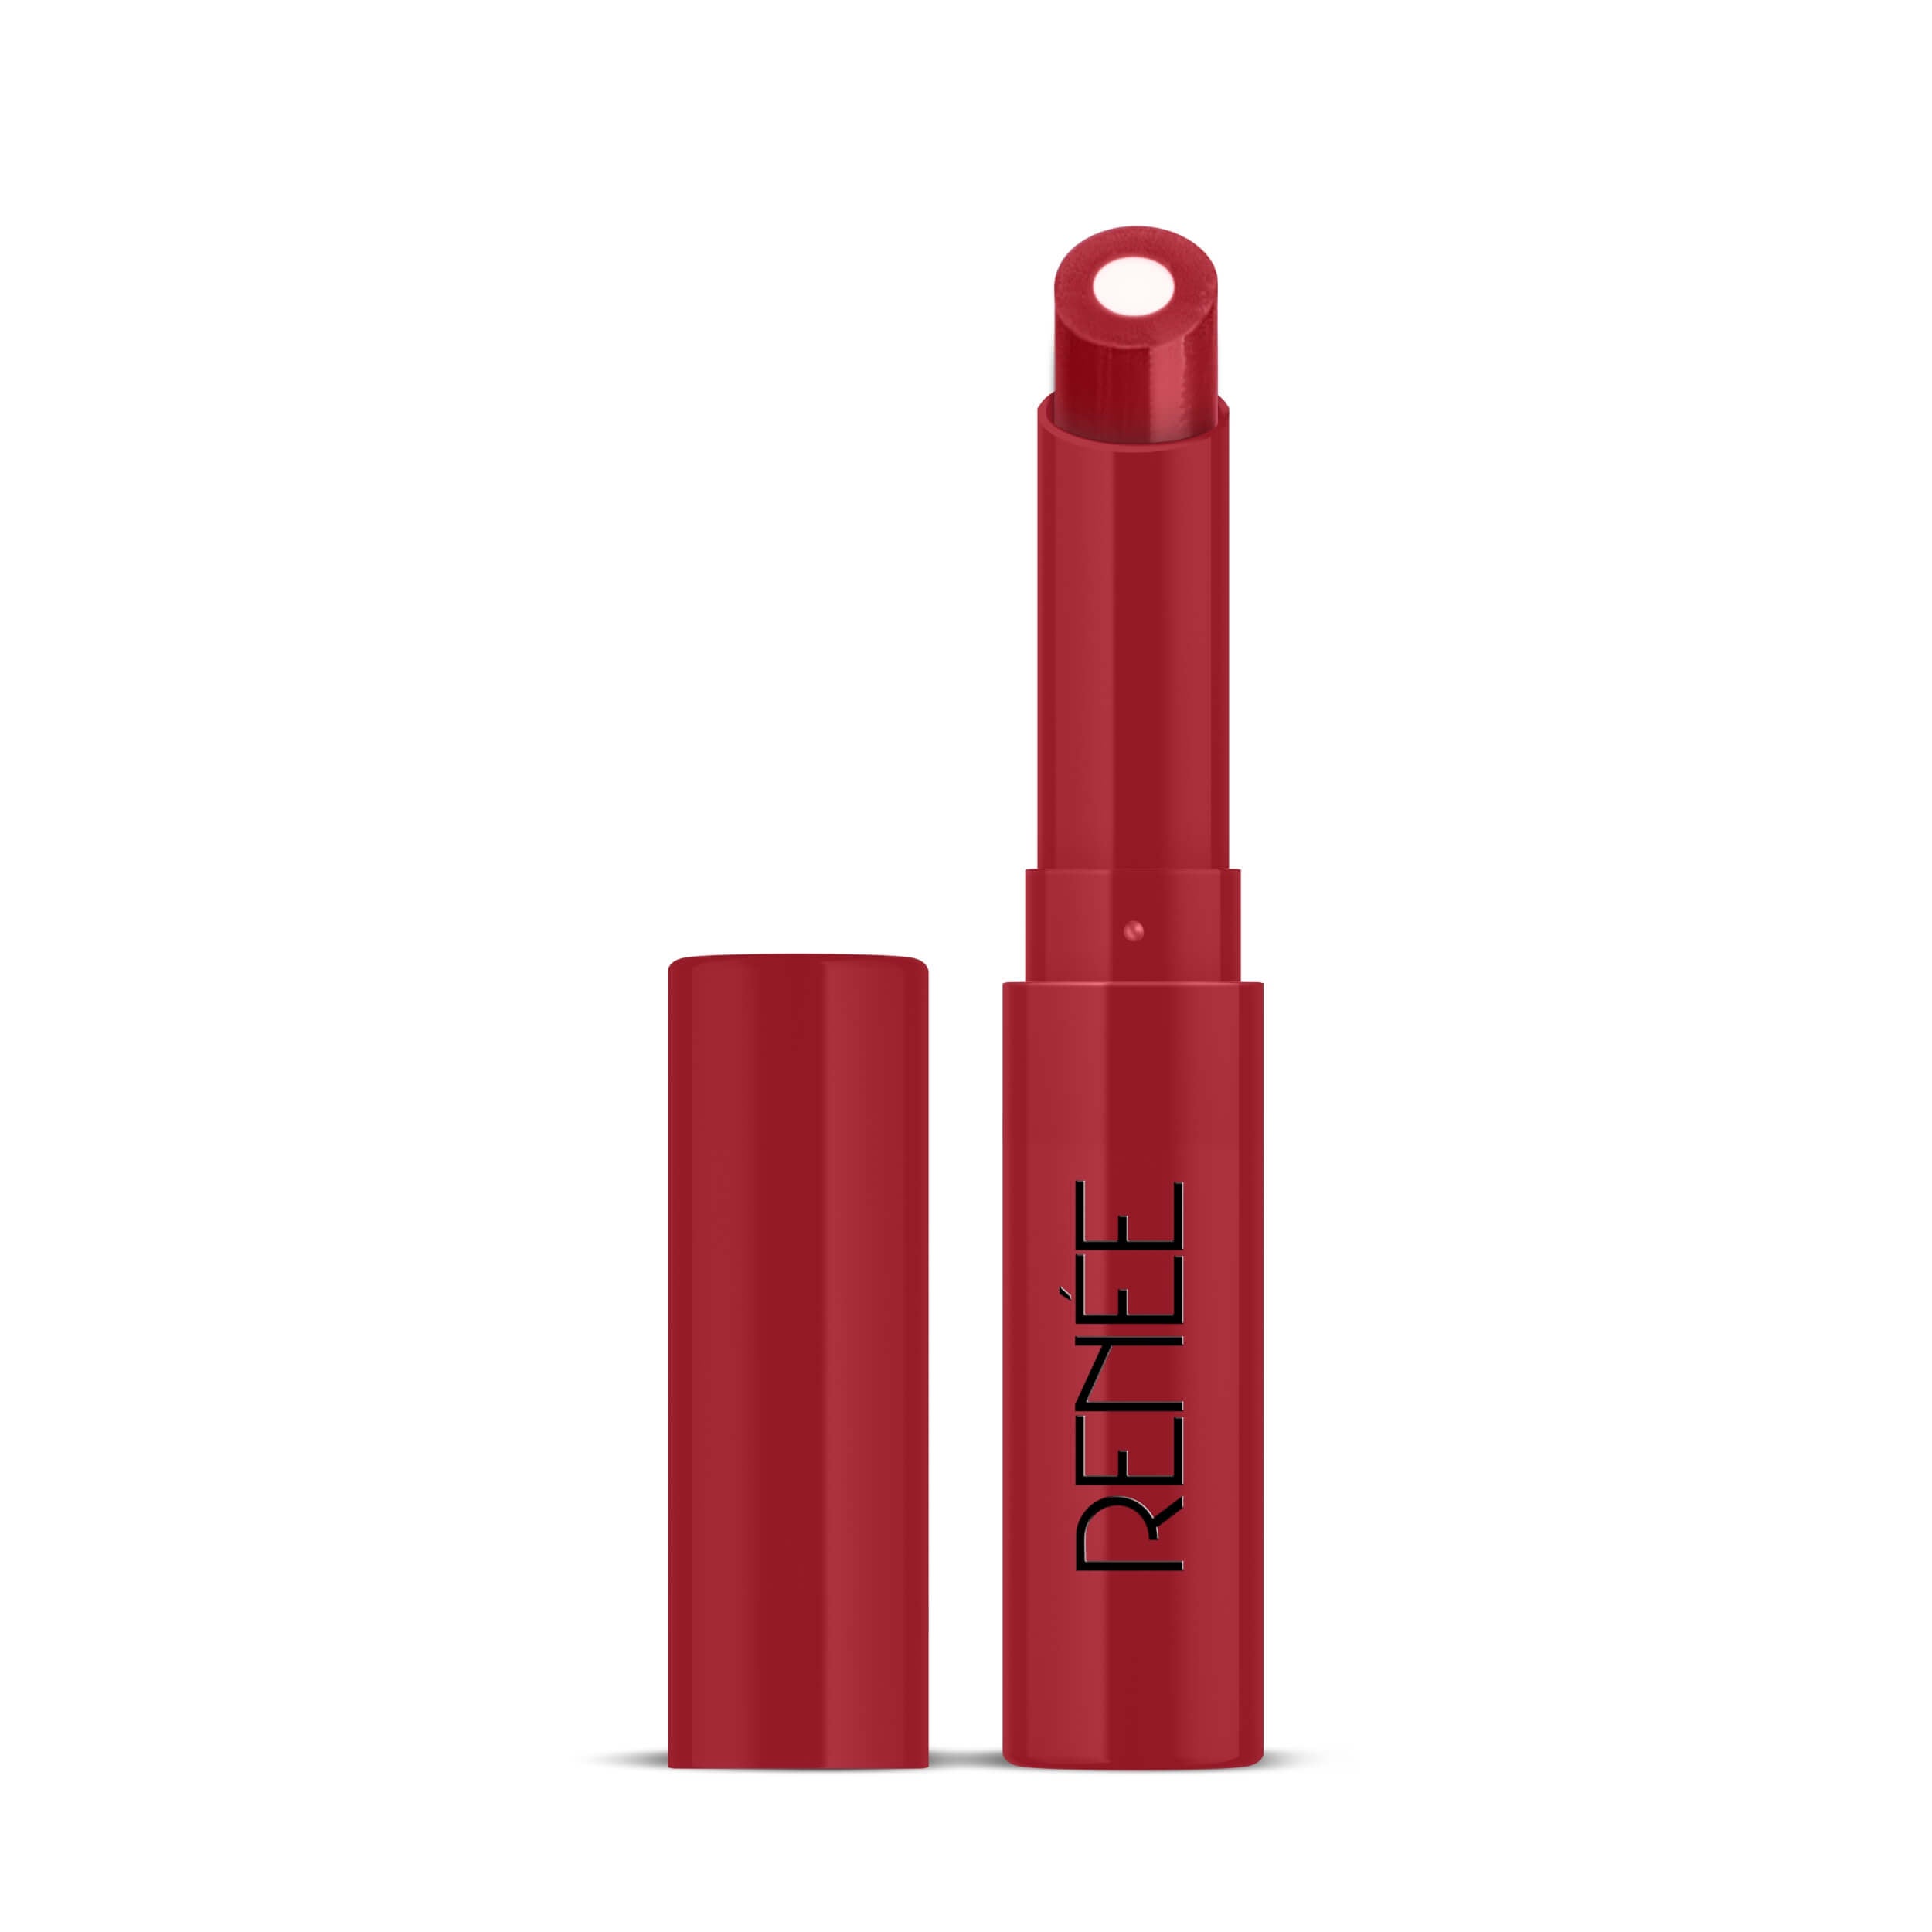 RENEE Lip Fix 3 in 1 Lip Balm, 1.6gm, Sorbet